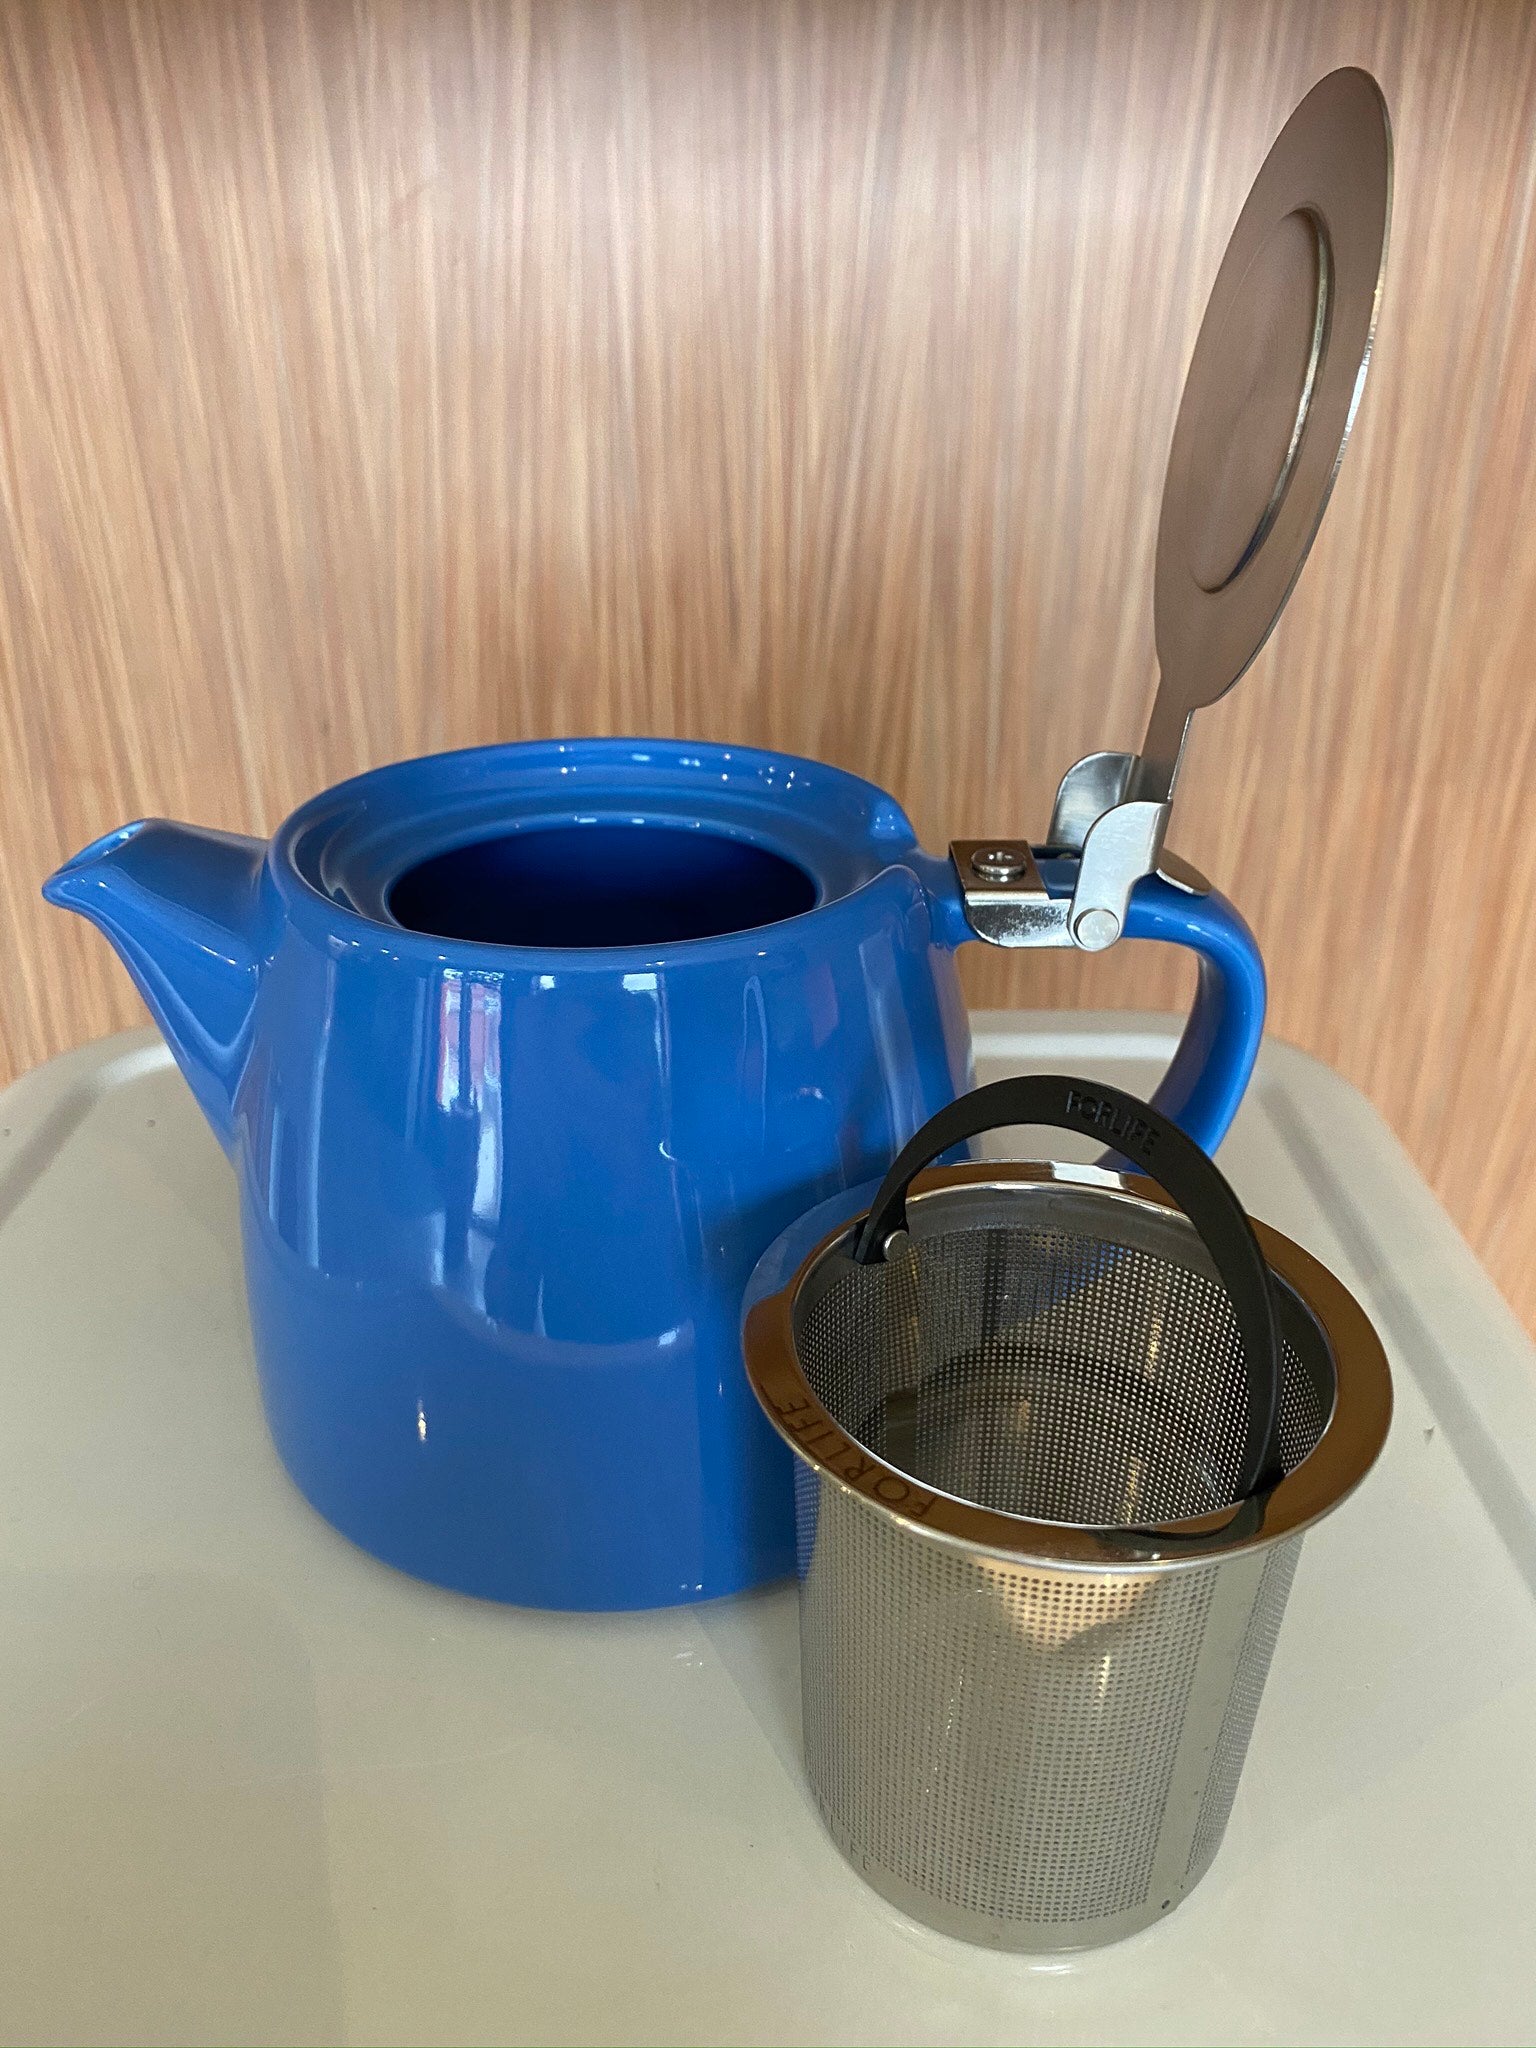 Marine blue stump teapot, For Life brand